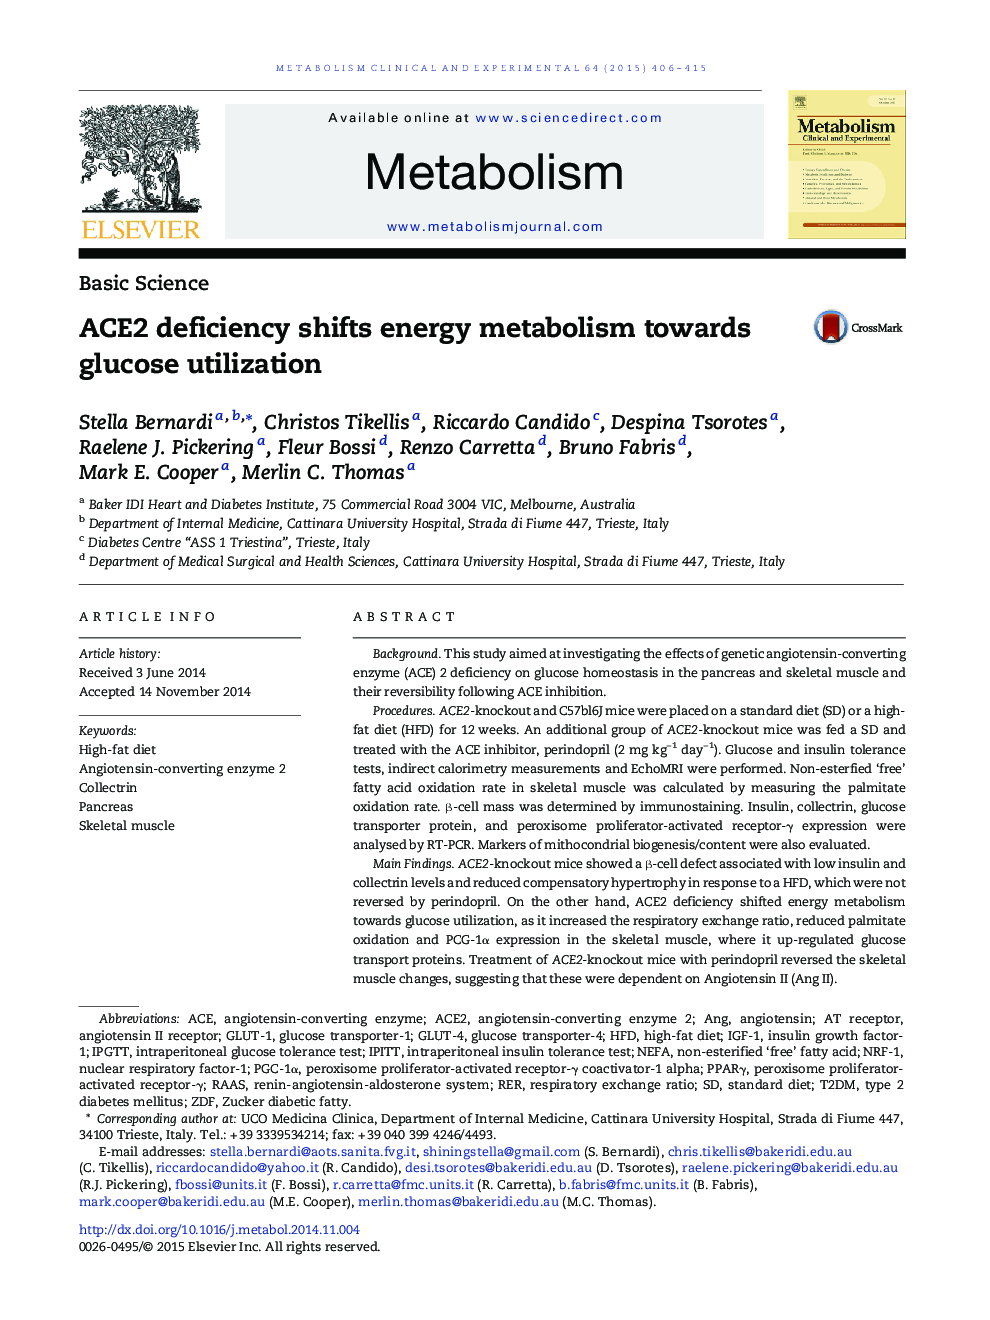 ACE2 deficiency shifts energy metabolism towards glucose utilization